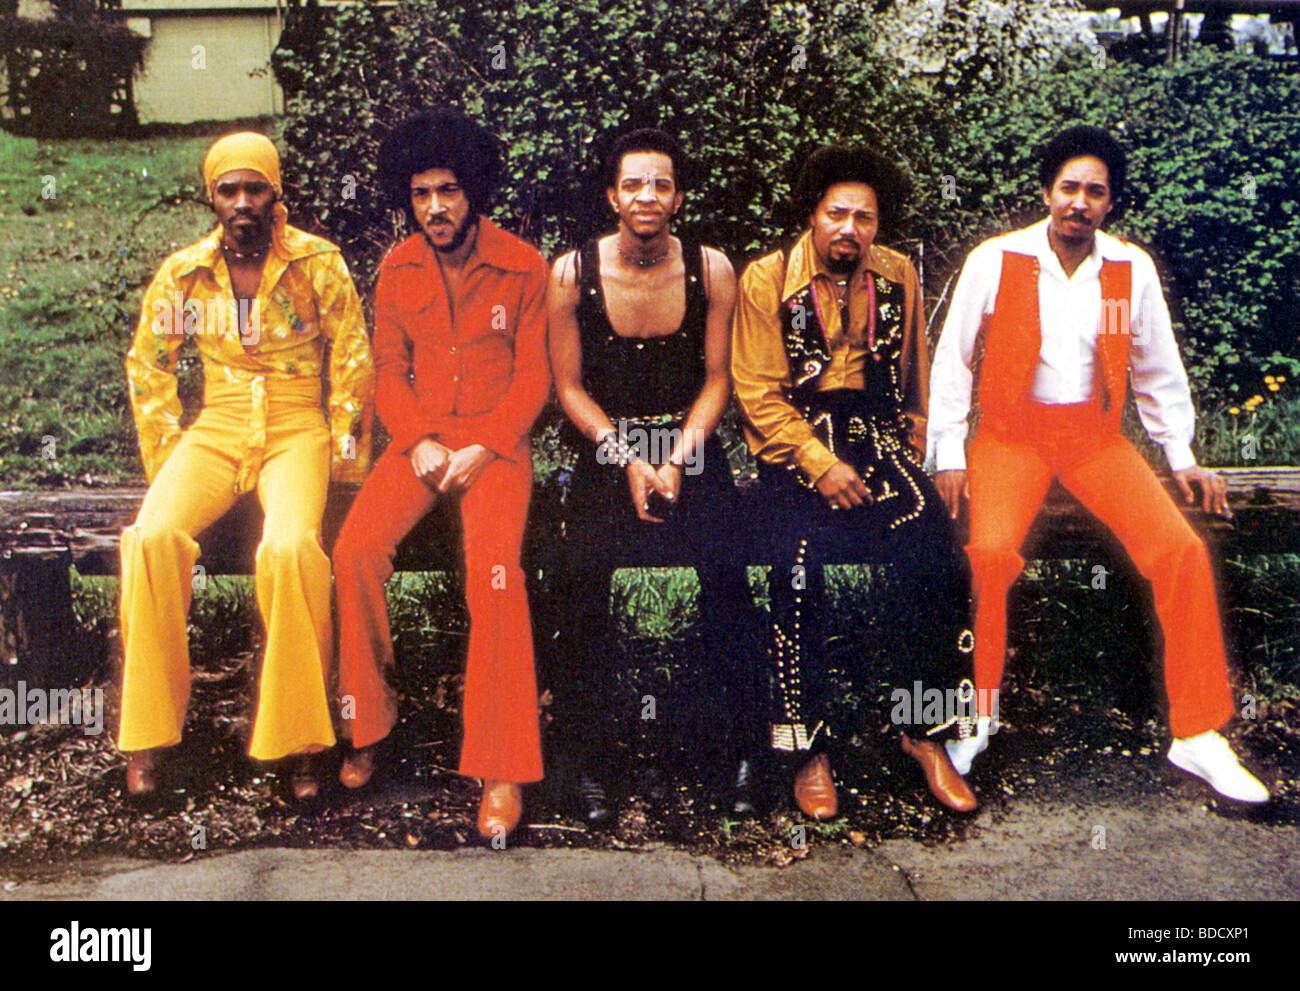 Metri - noi degli anni settanta funk soul gruppo Foto stock - Alamy